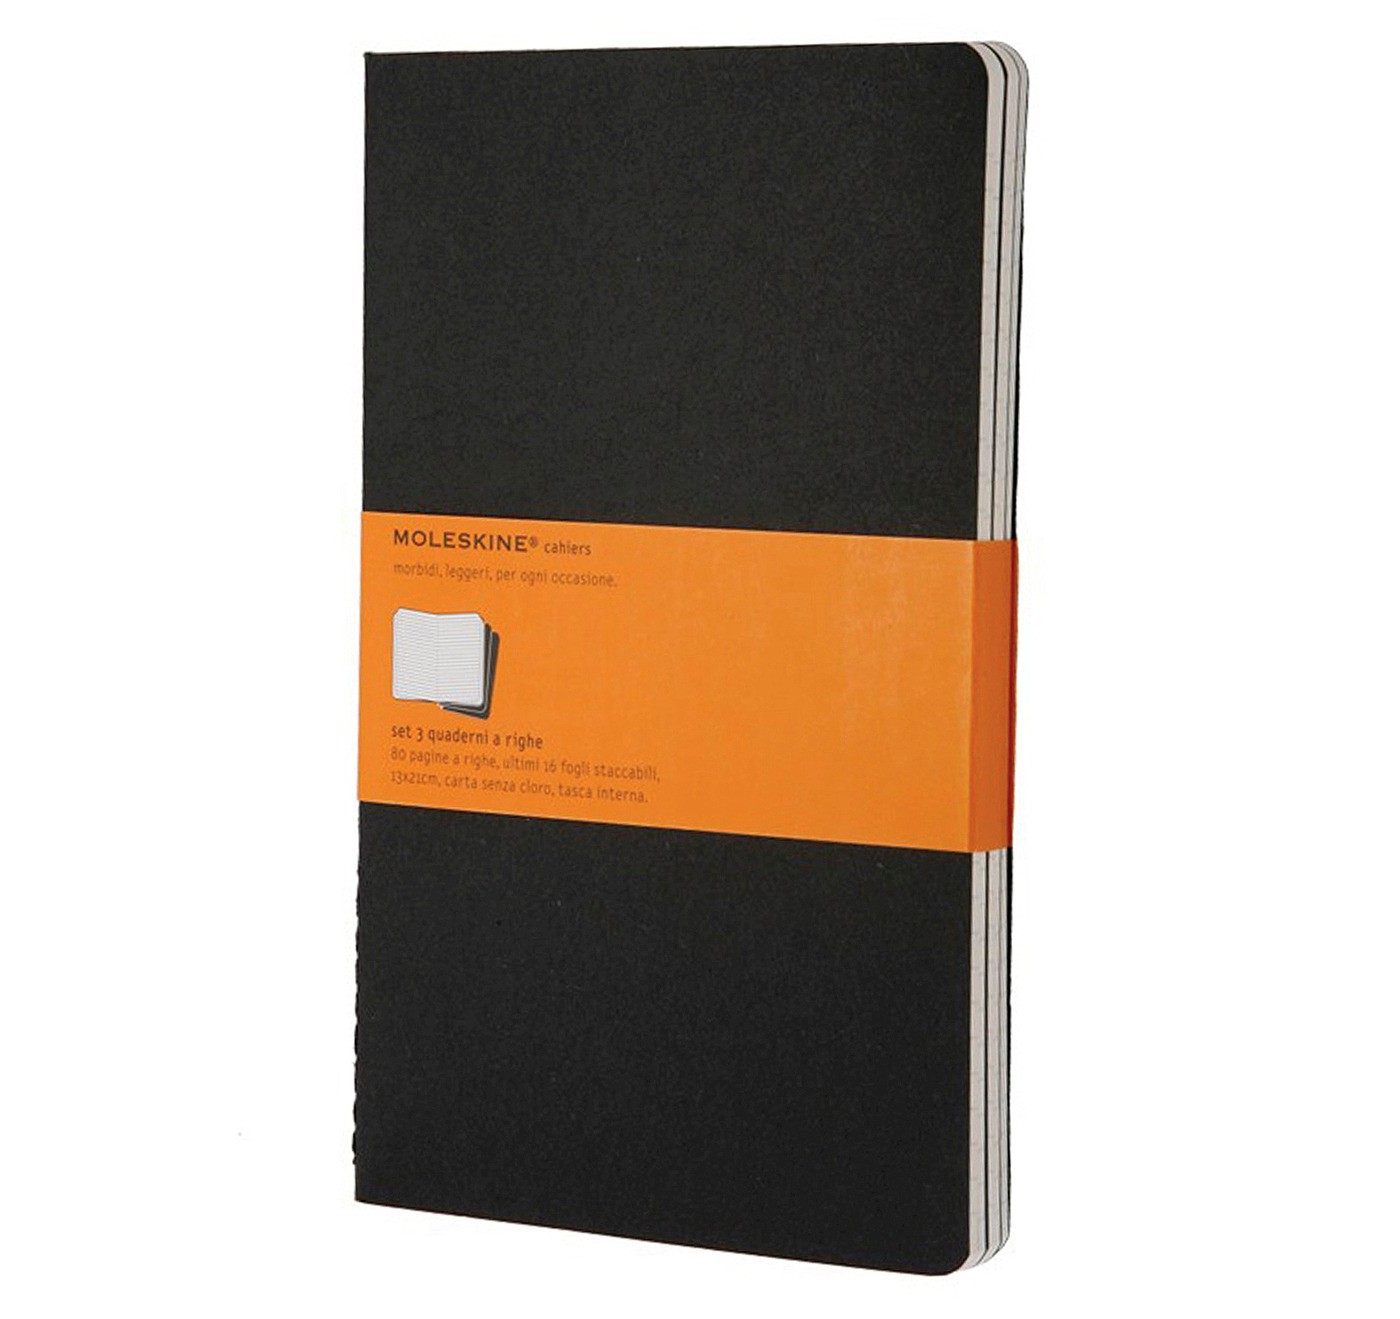 Notebook Moleskine 8.37" x 5.37" Black - image 1 of 2